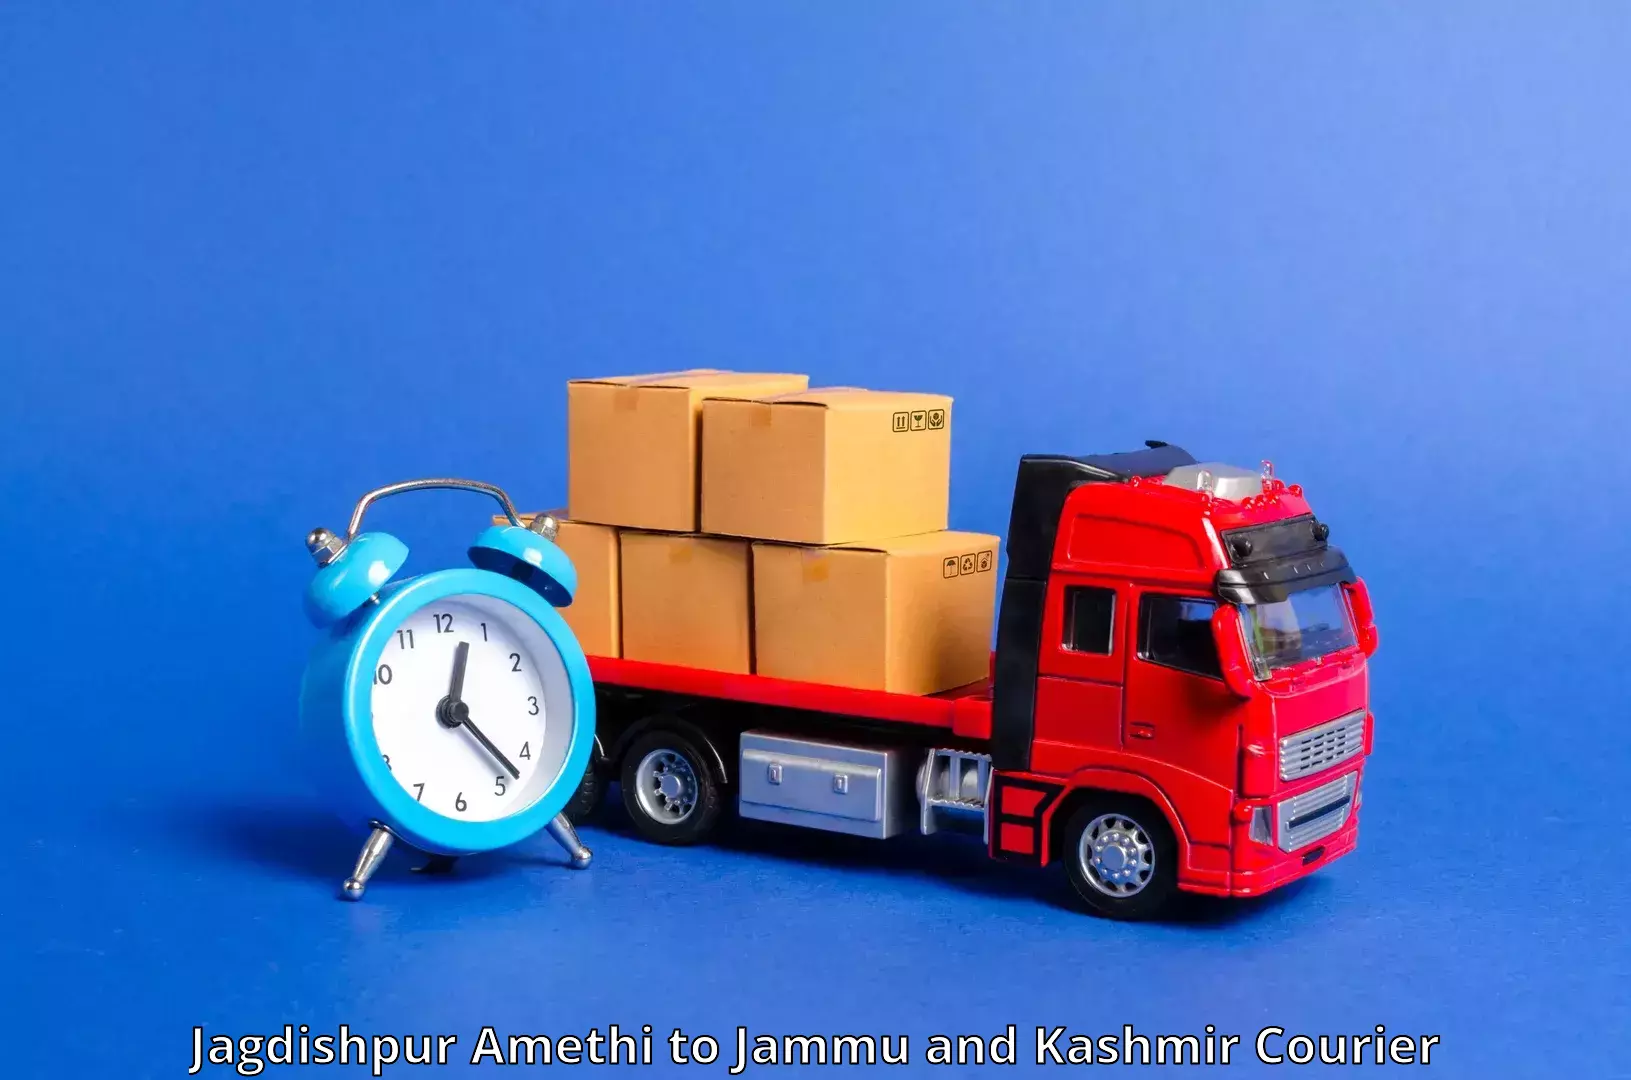 Express package handling Jagdishpur Amethi to Jammu and Kashmir